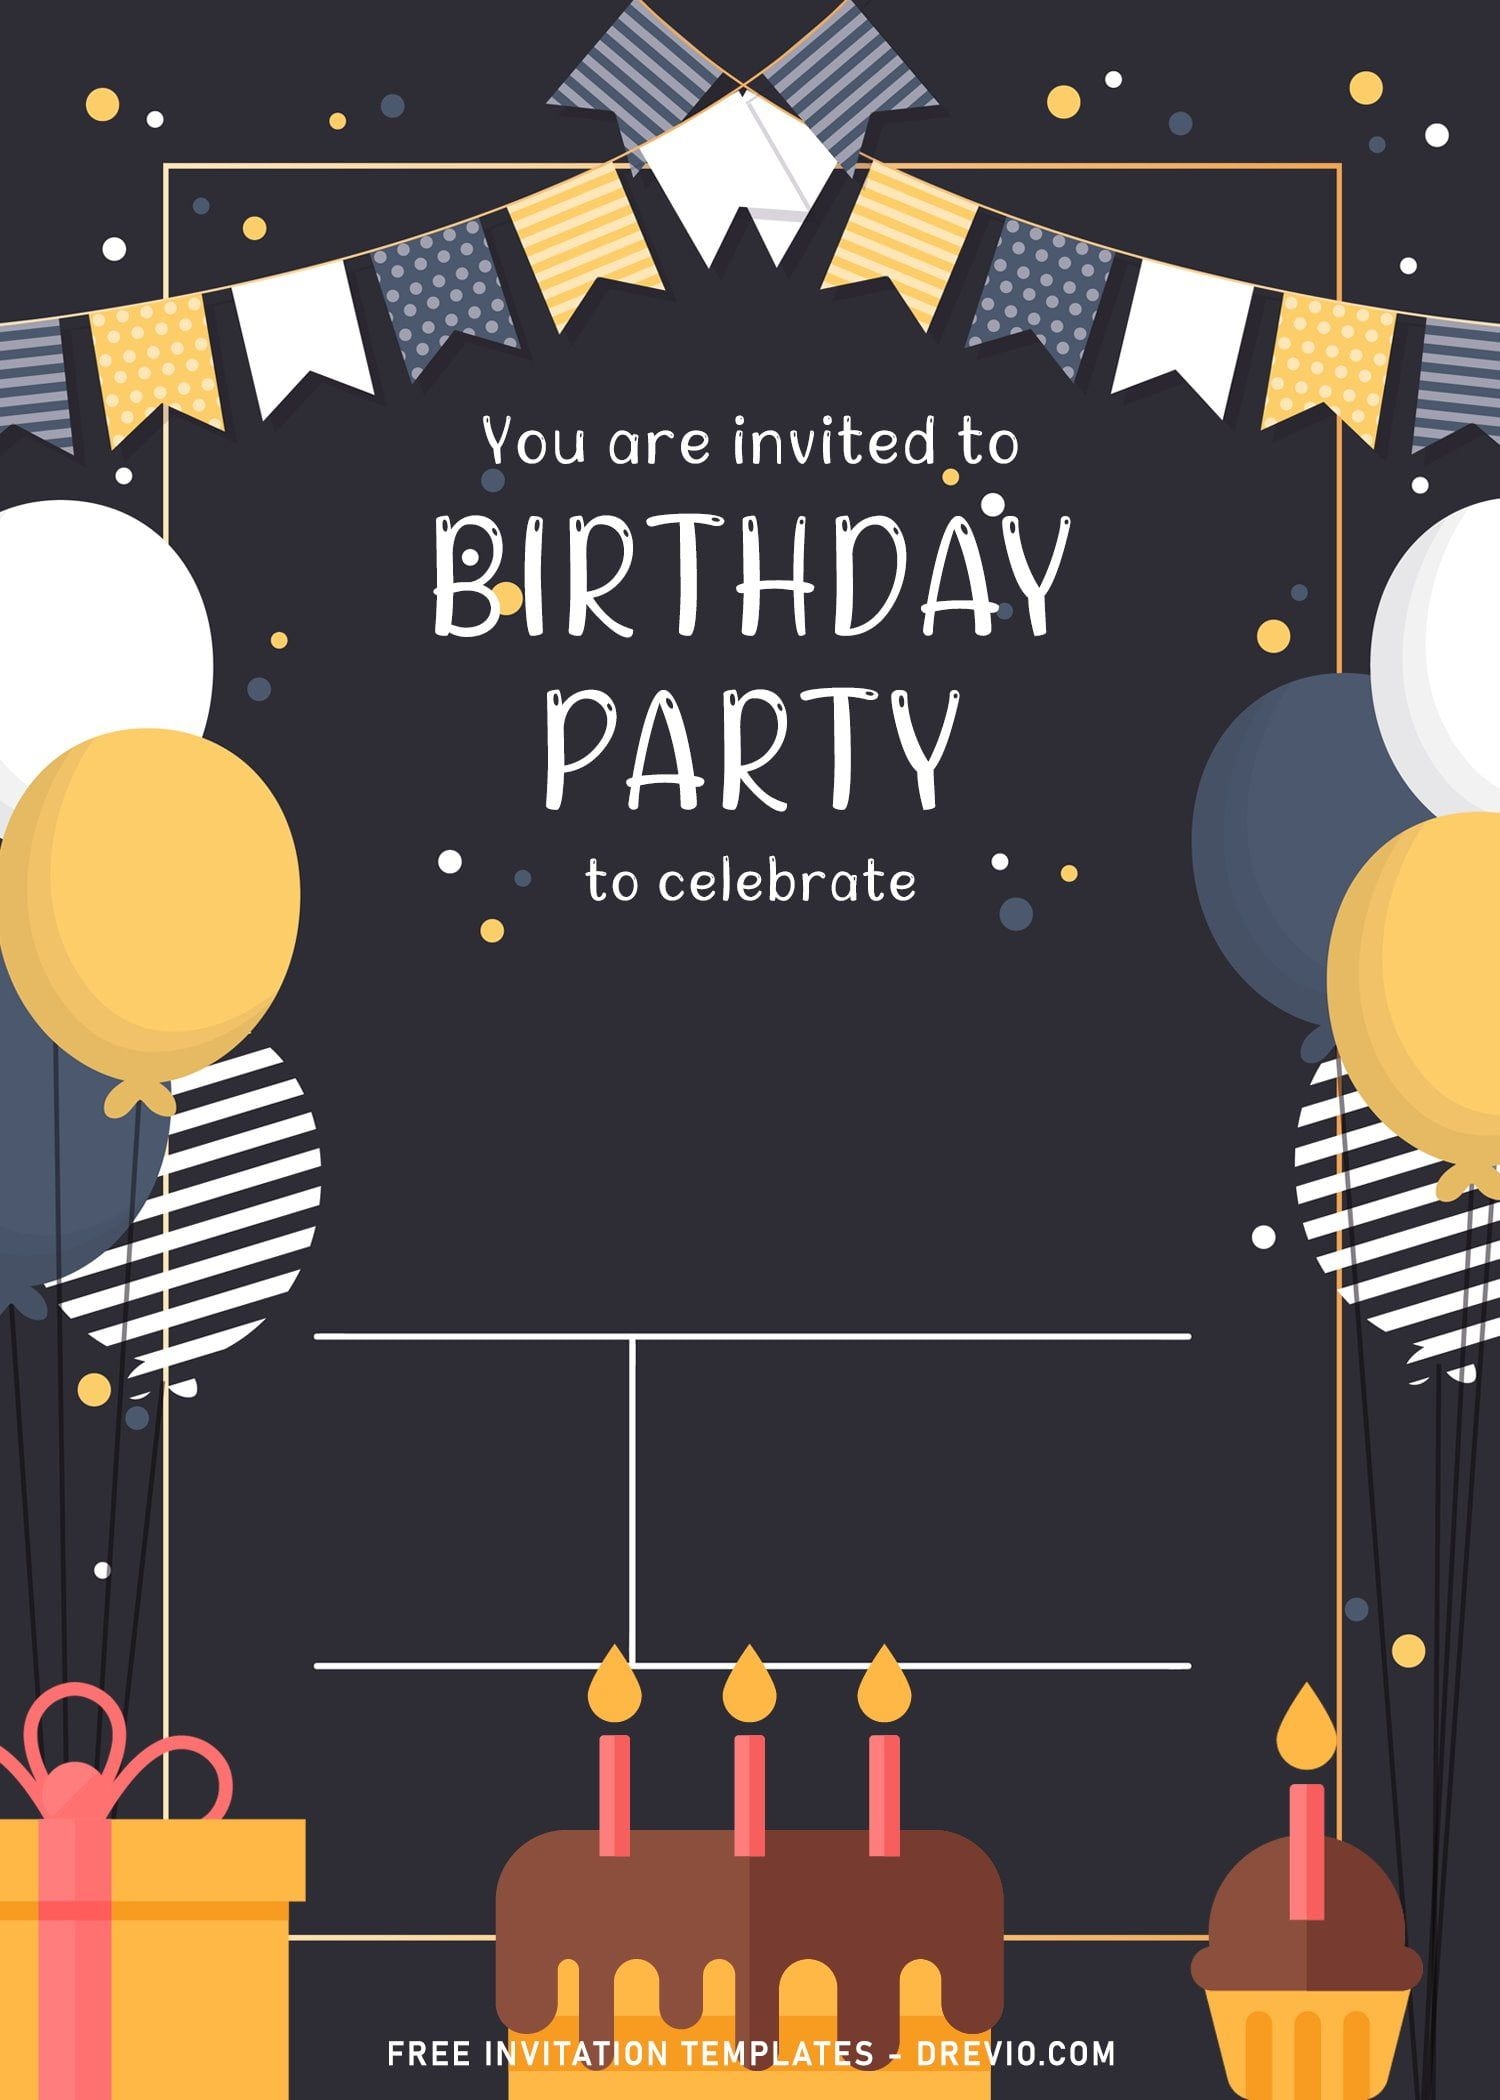 7 Cute And Fun Birthday Invitation Templates For Any Ages Printable Birthday Invitations Birthday Invitations Free Birthday Invitations - Free Printable Birthday Invitations For Him